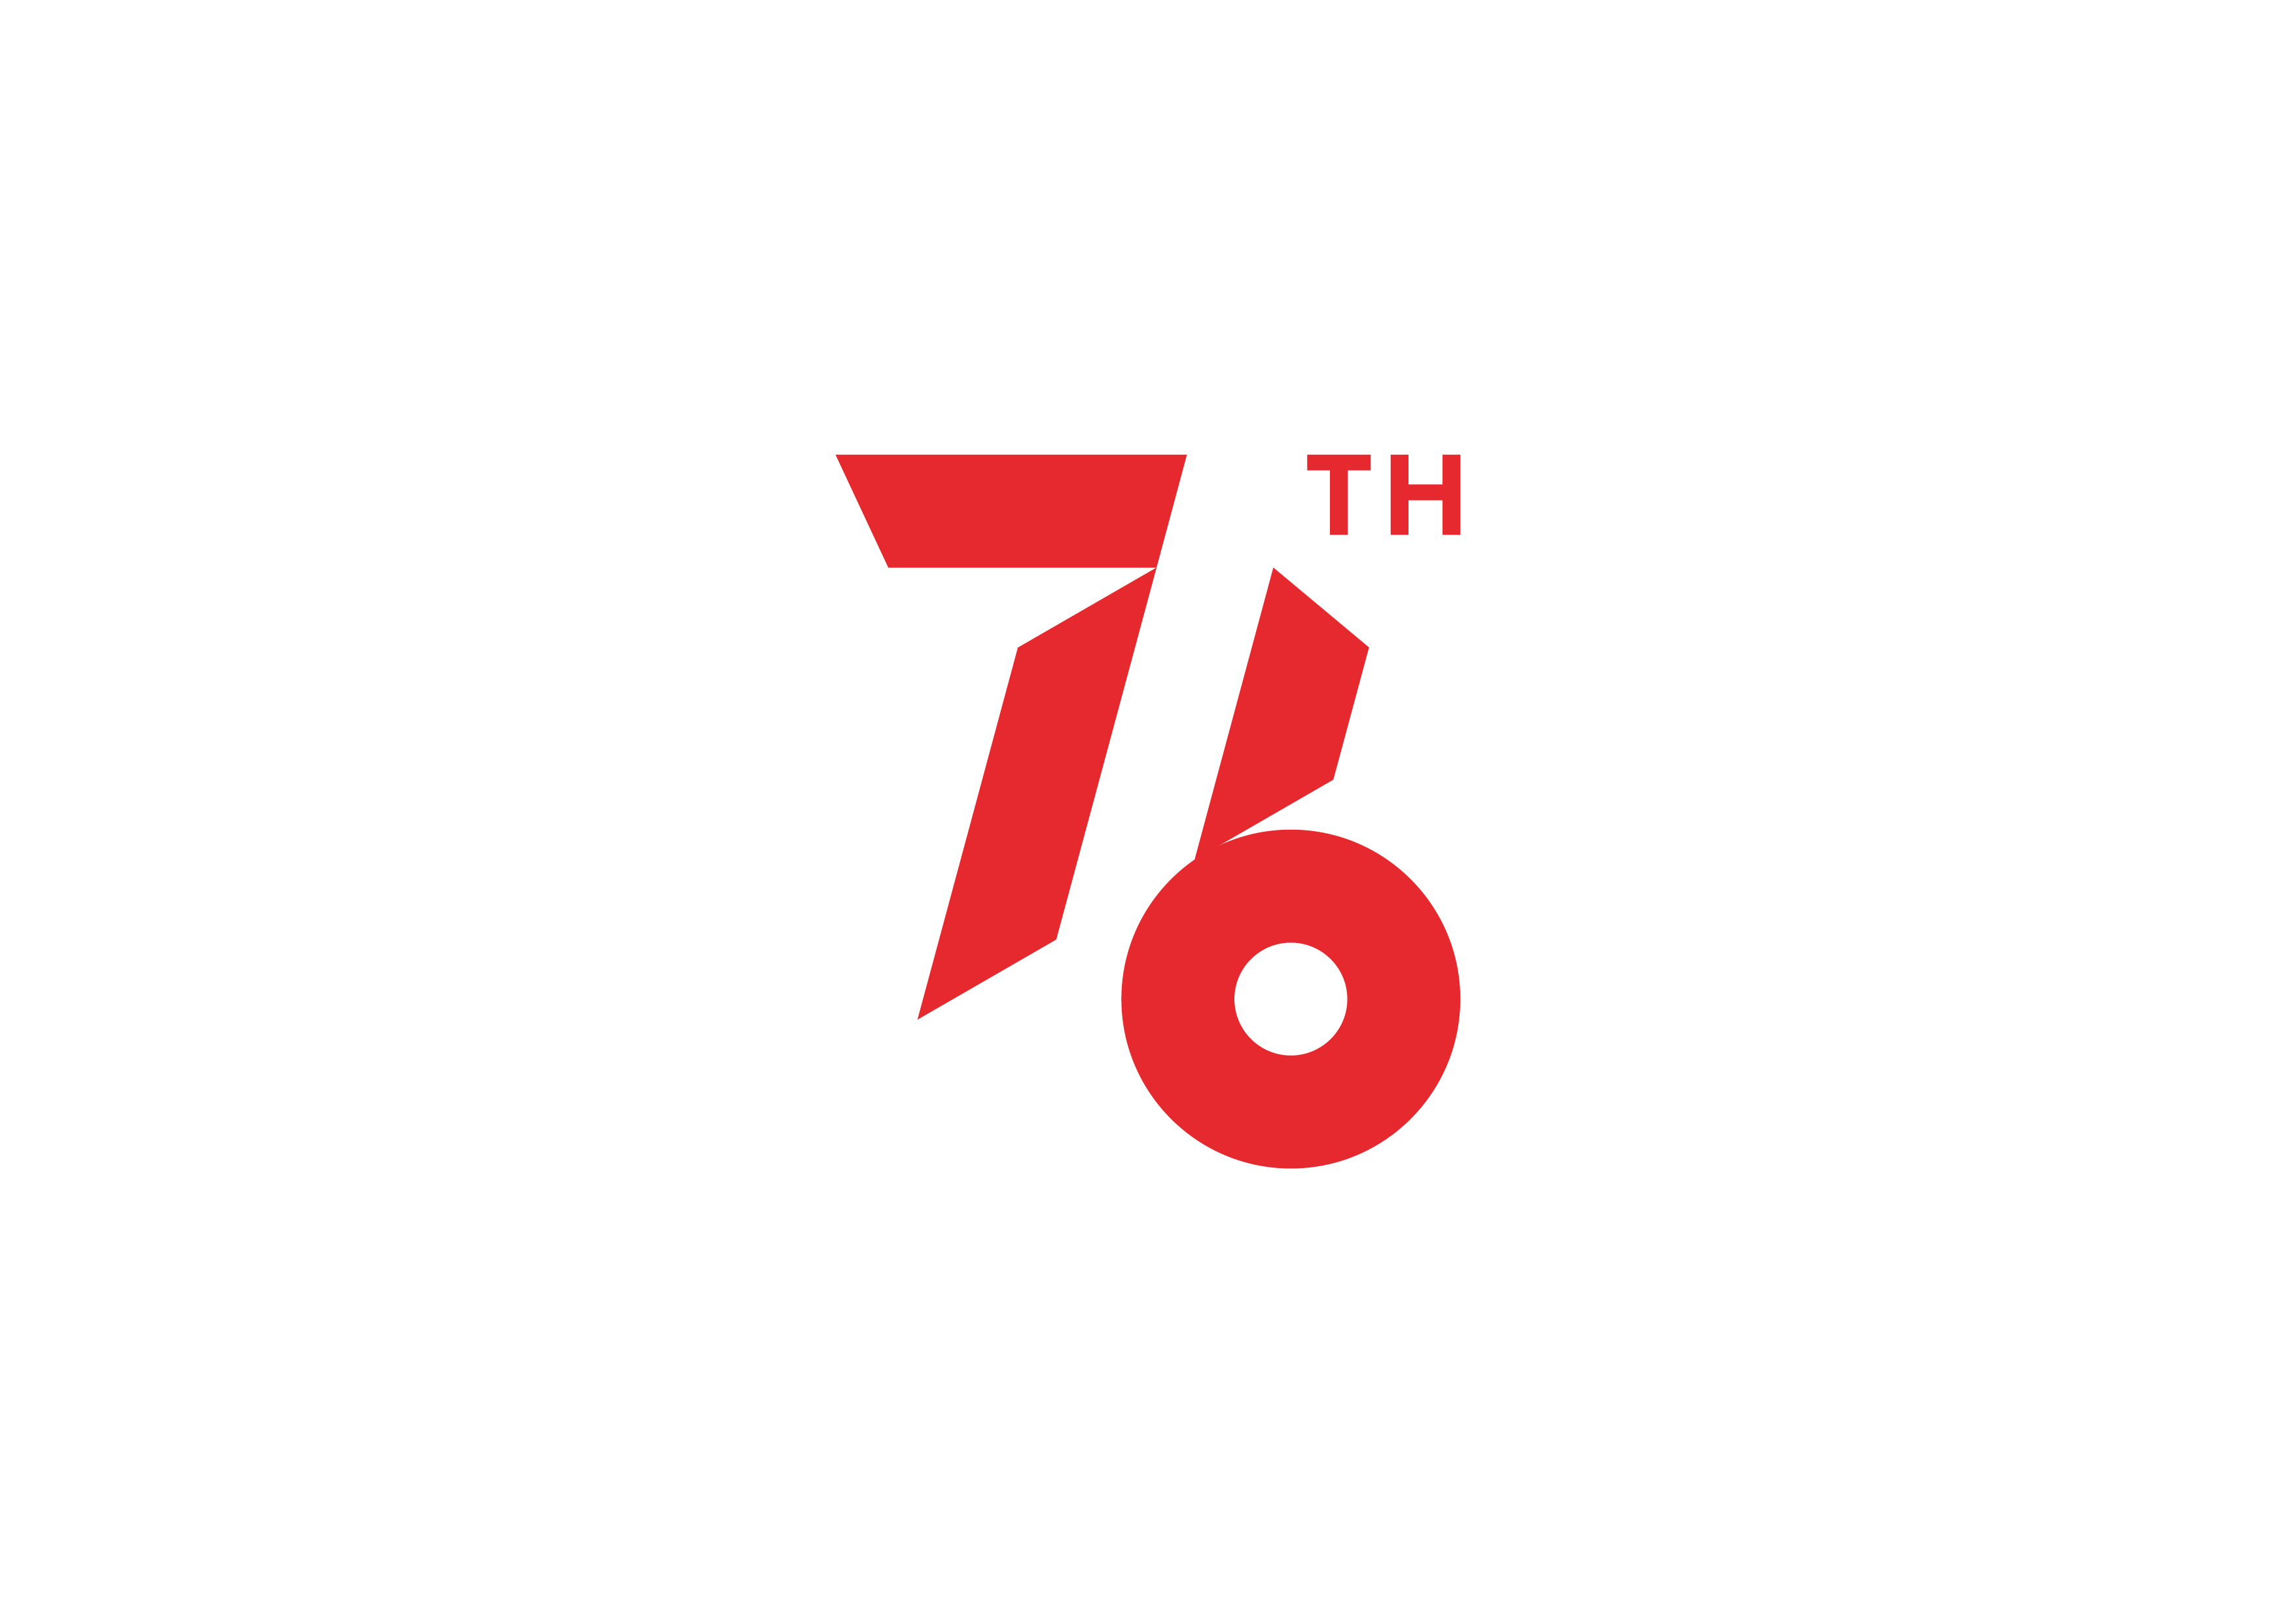  Logo HUT KE-76 Kemerdekaan RI Tahun 2021 tanpa tagline (Sumber: Kemensetneg)